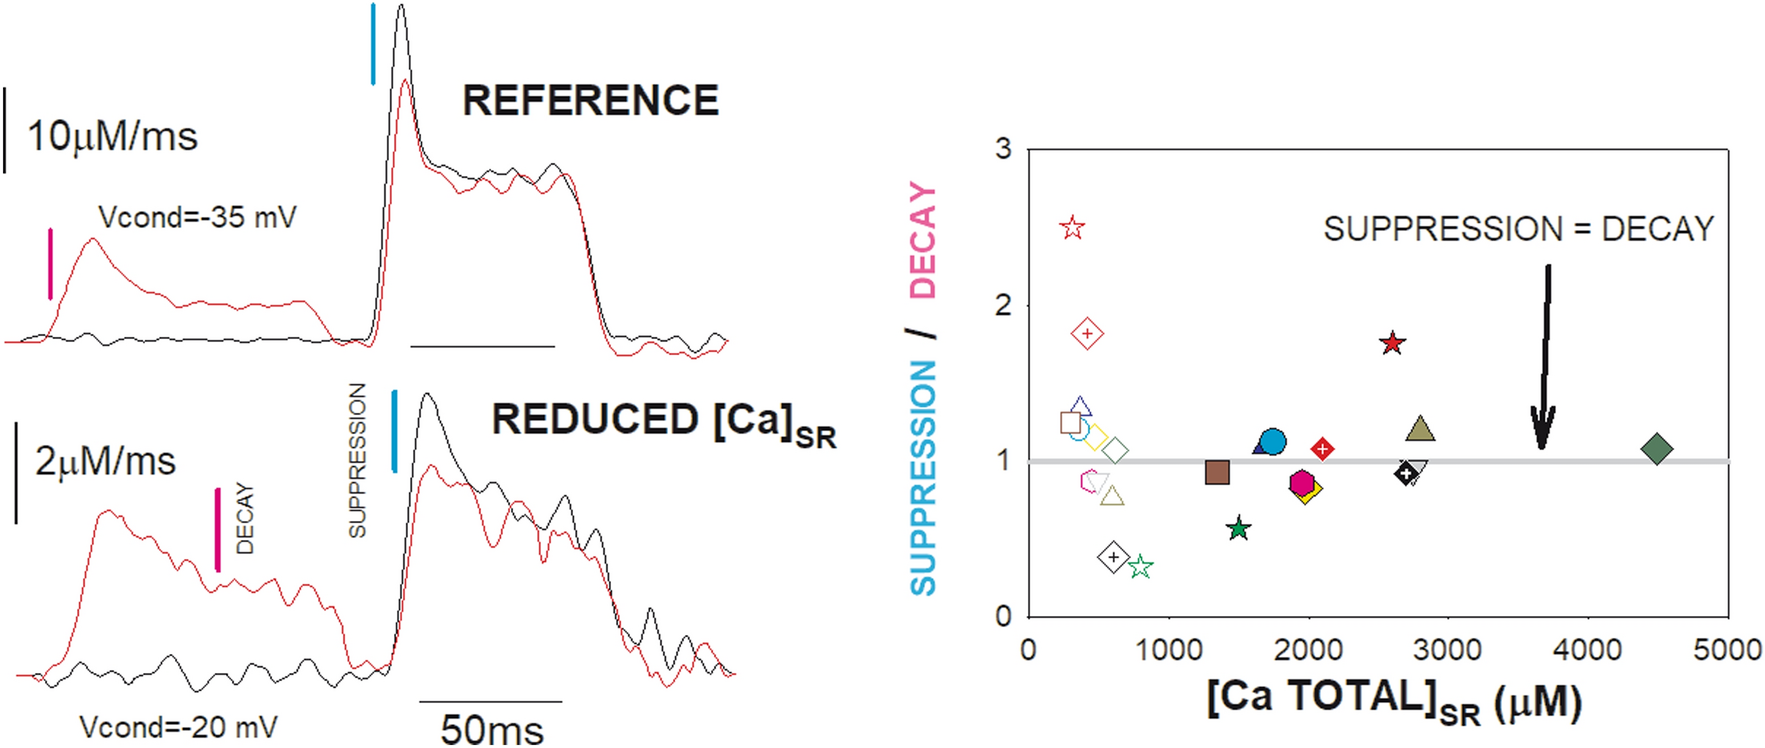 Quantal Properties of Voltage-Dependent Ca2+ Release in Frog Skeletal Muscle Persist After Reduction of [Ca2+] in the Sarcoplasmic Reticulum